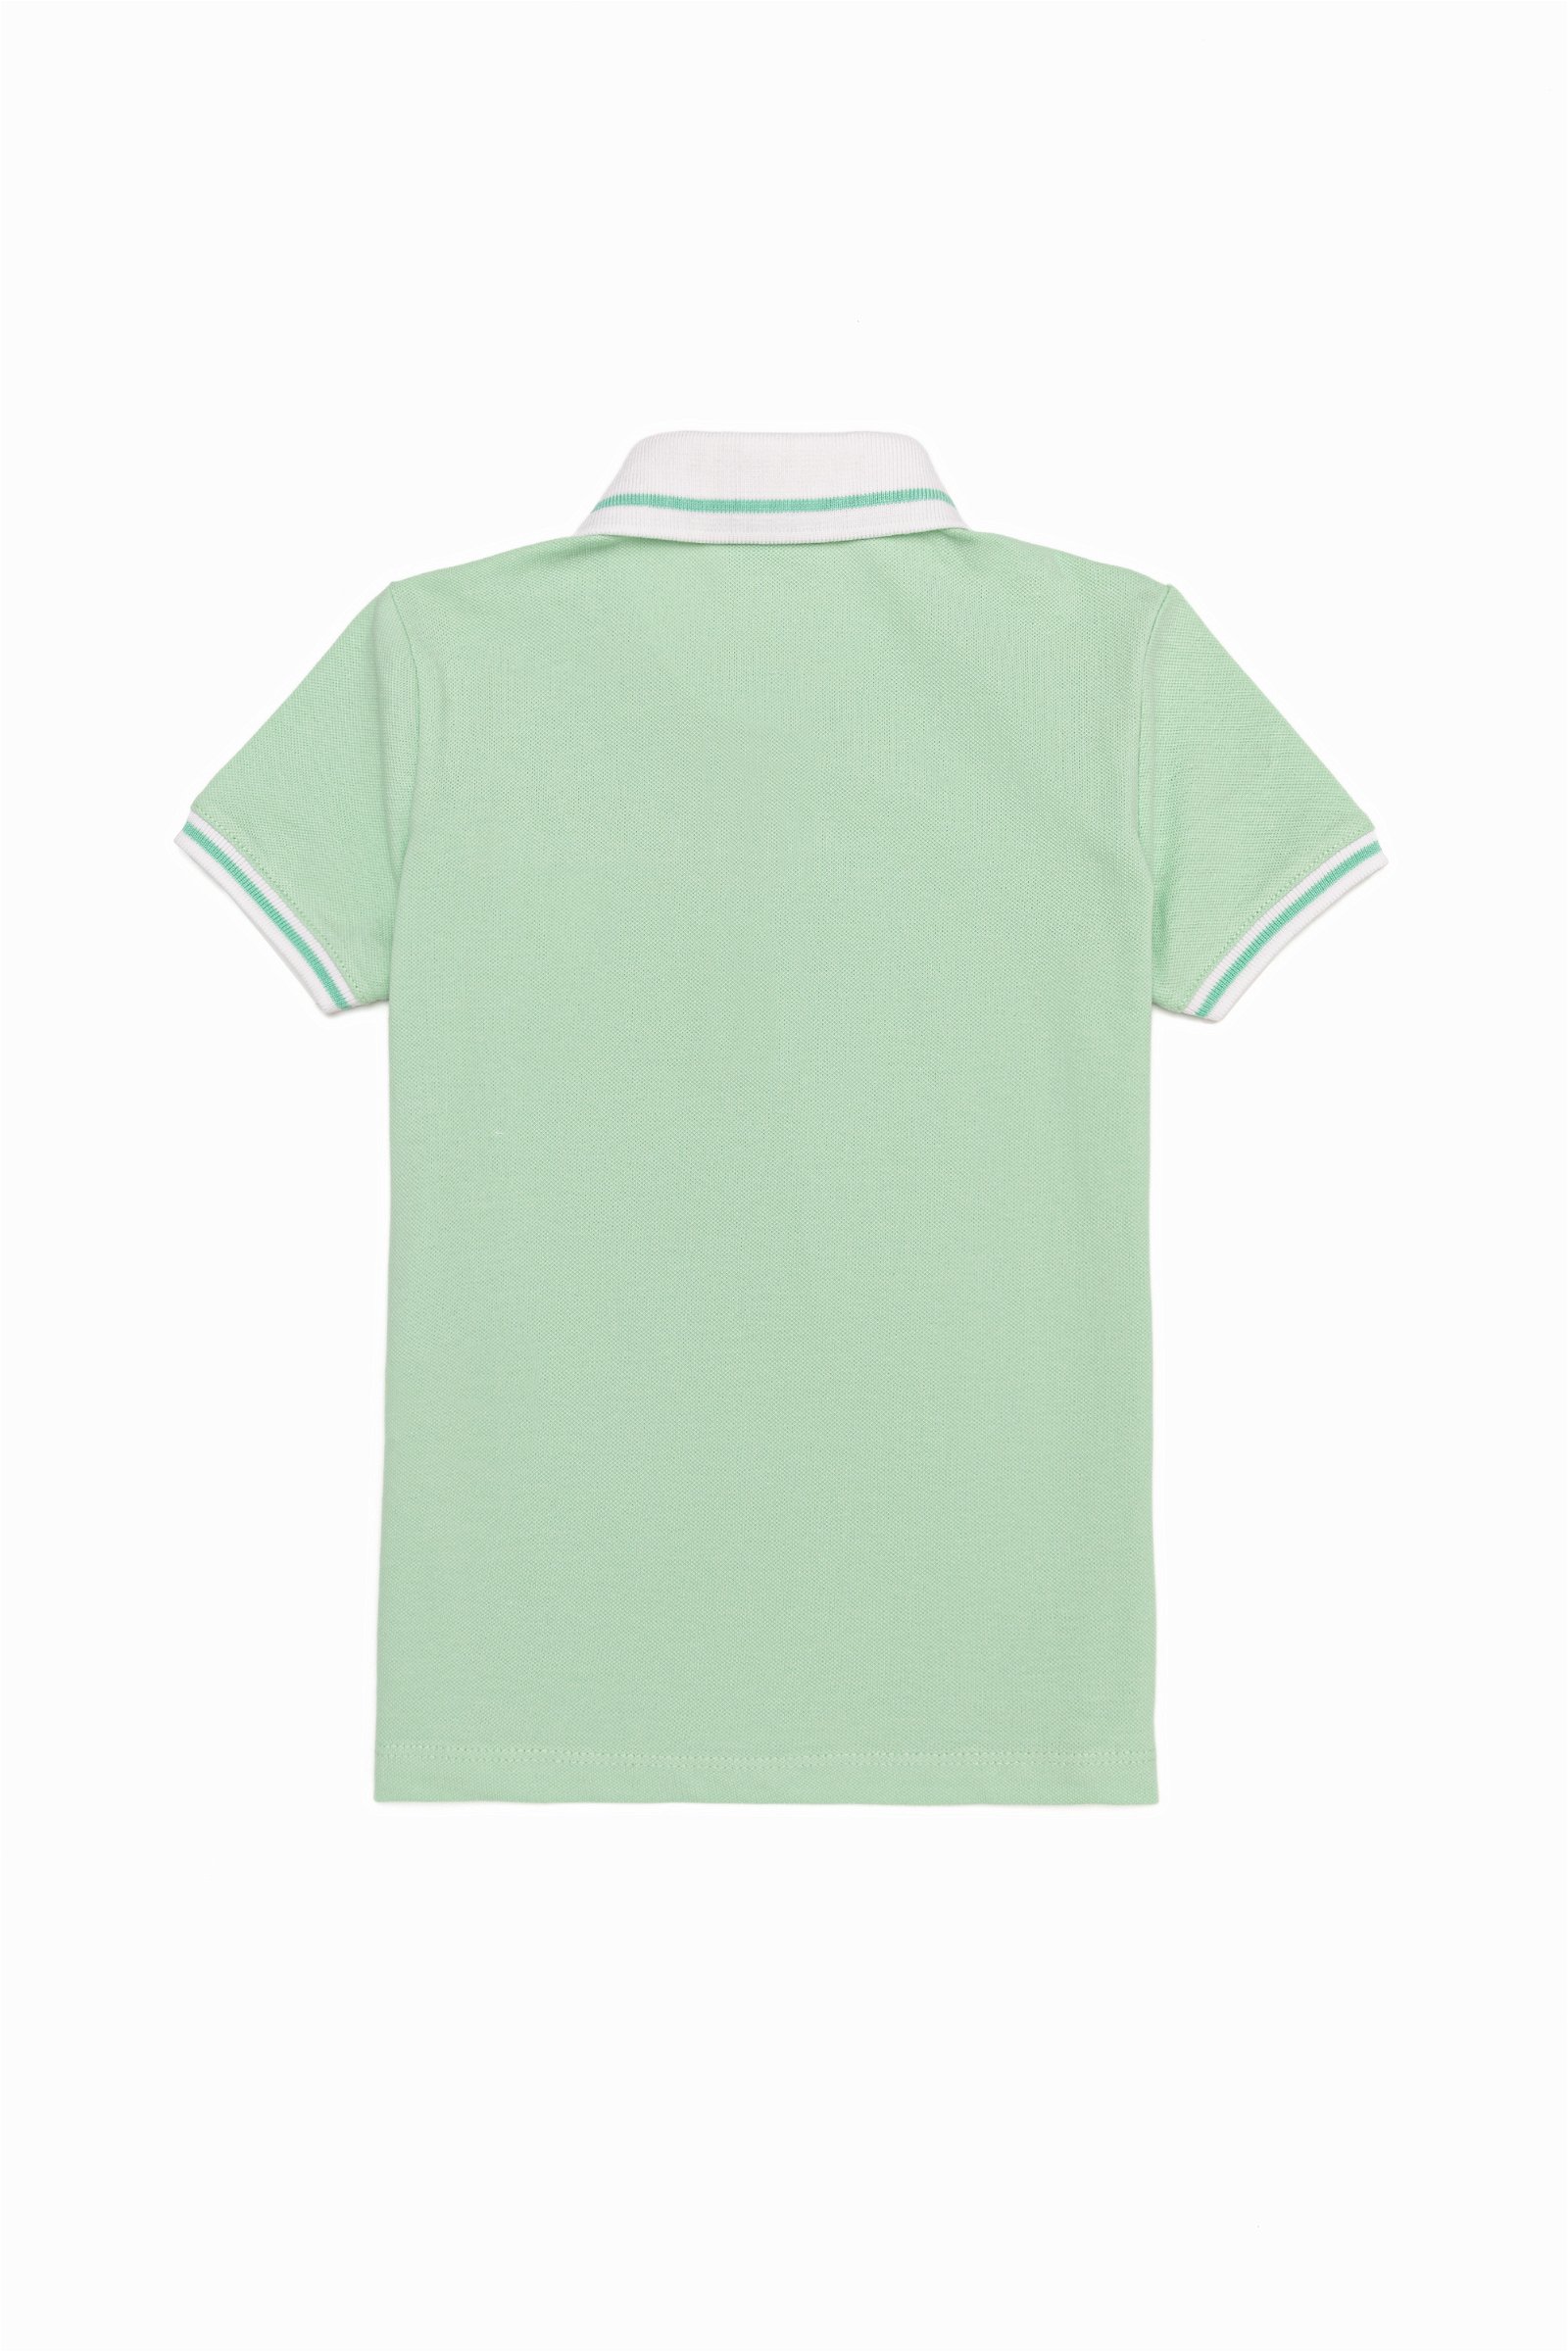 تی شرت یقه پولو نعناعی  اندامی  دخترانه یو اس پولو | US POLO ASSN